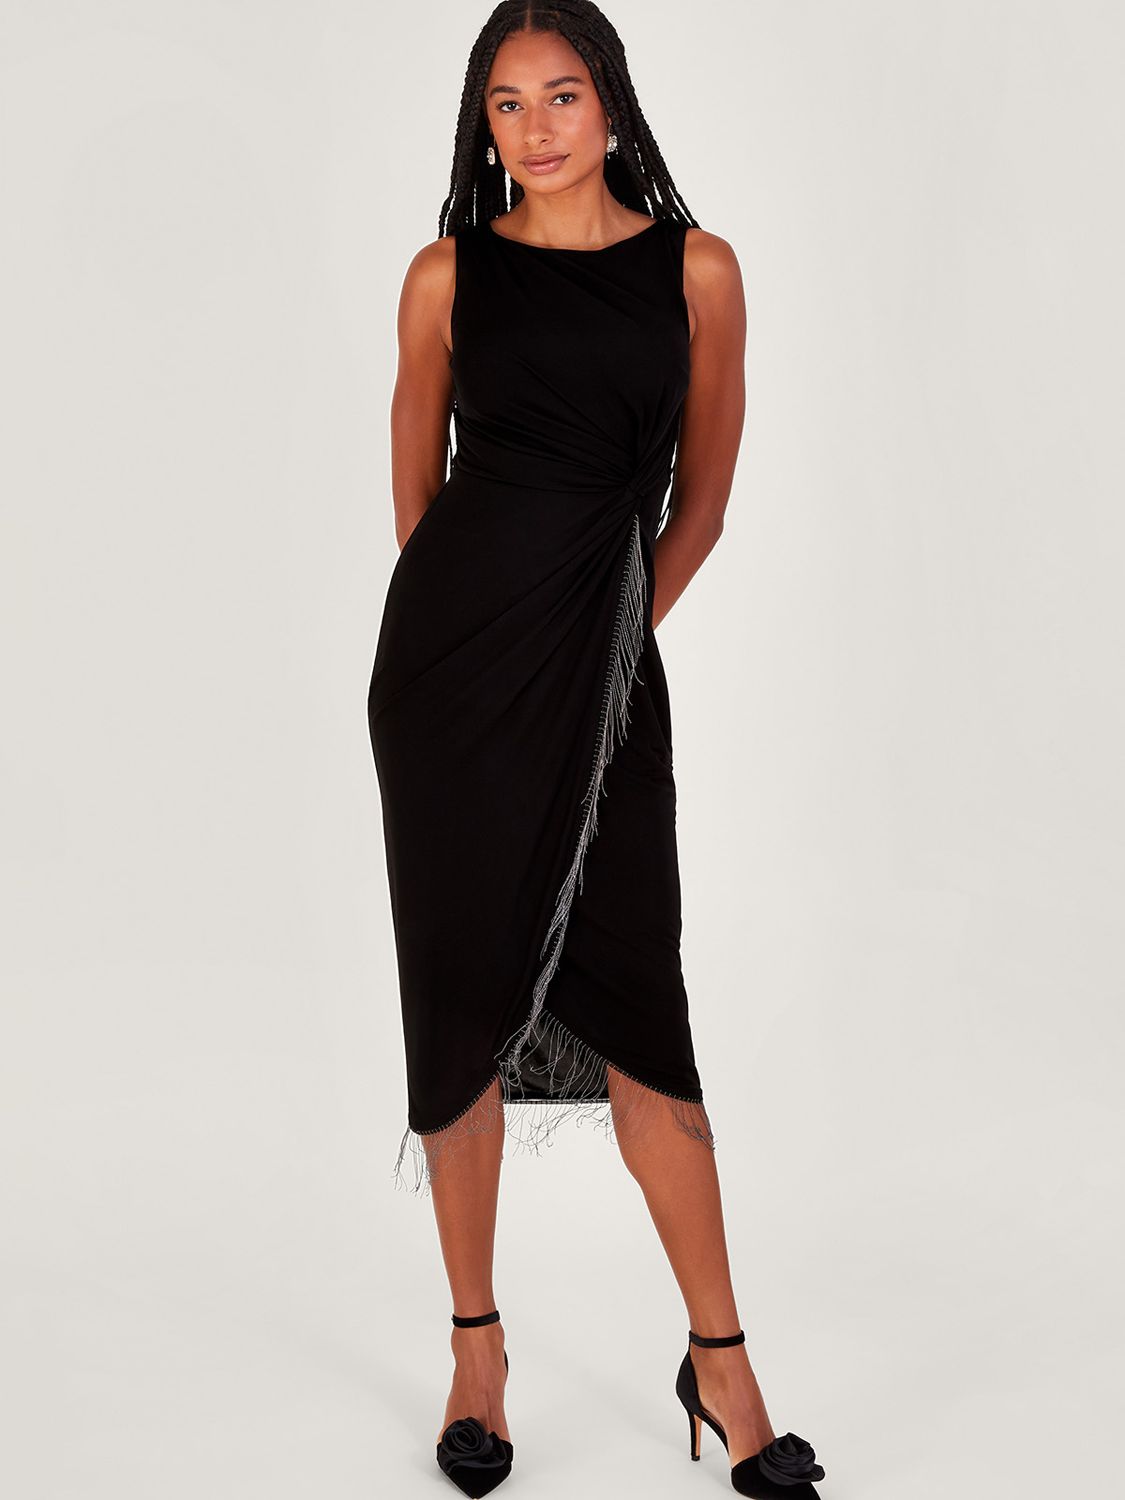 Monsoon Fawn Fringe Dress, Black at John Lewis & Partners